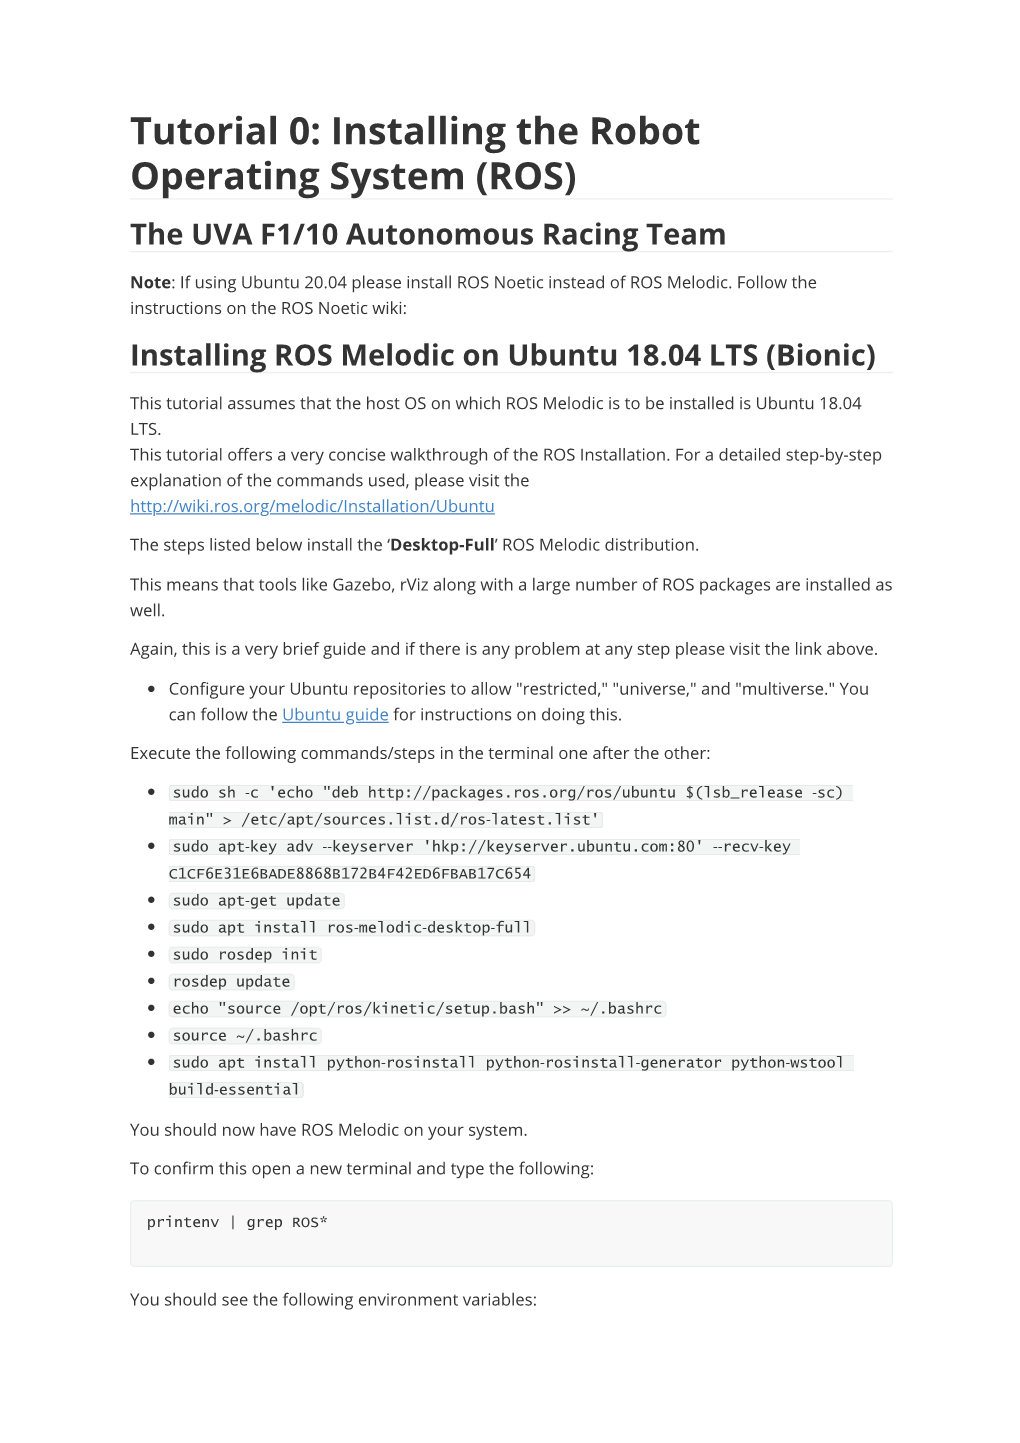 Tutorial 0: Installing the Robot Operating System (ROS) the UVA F1/10 Autonomous Racing Team